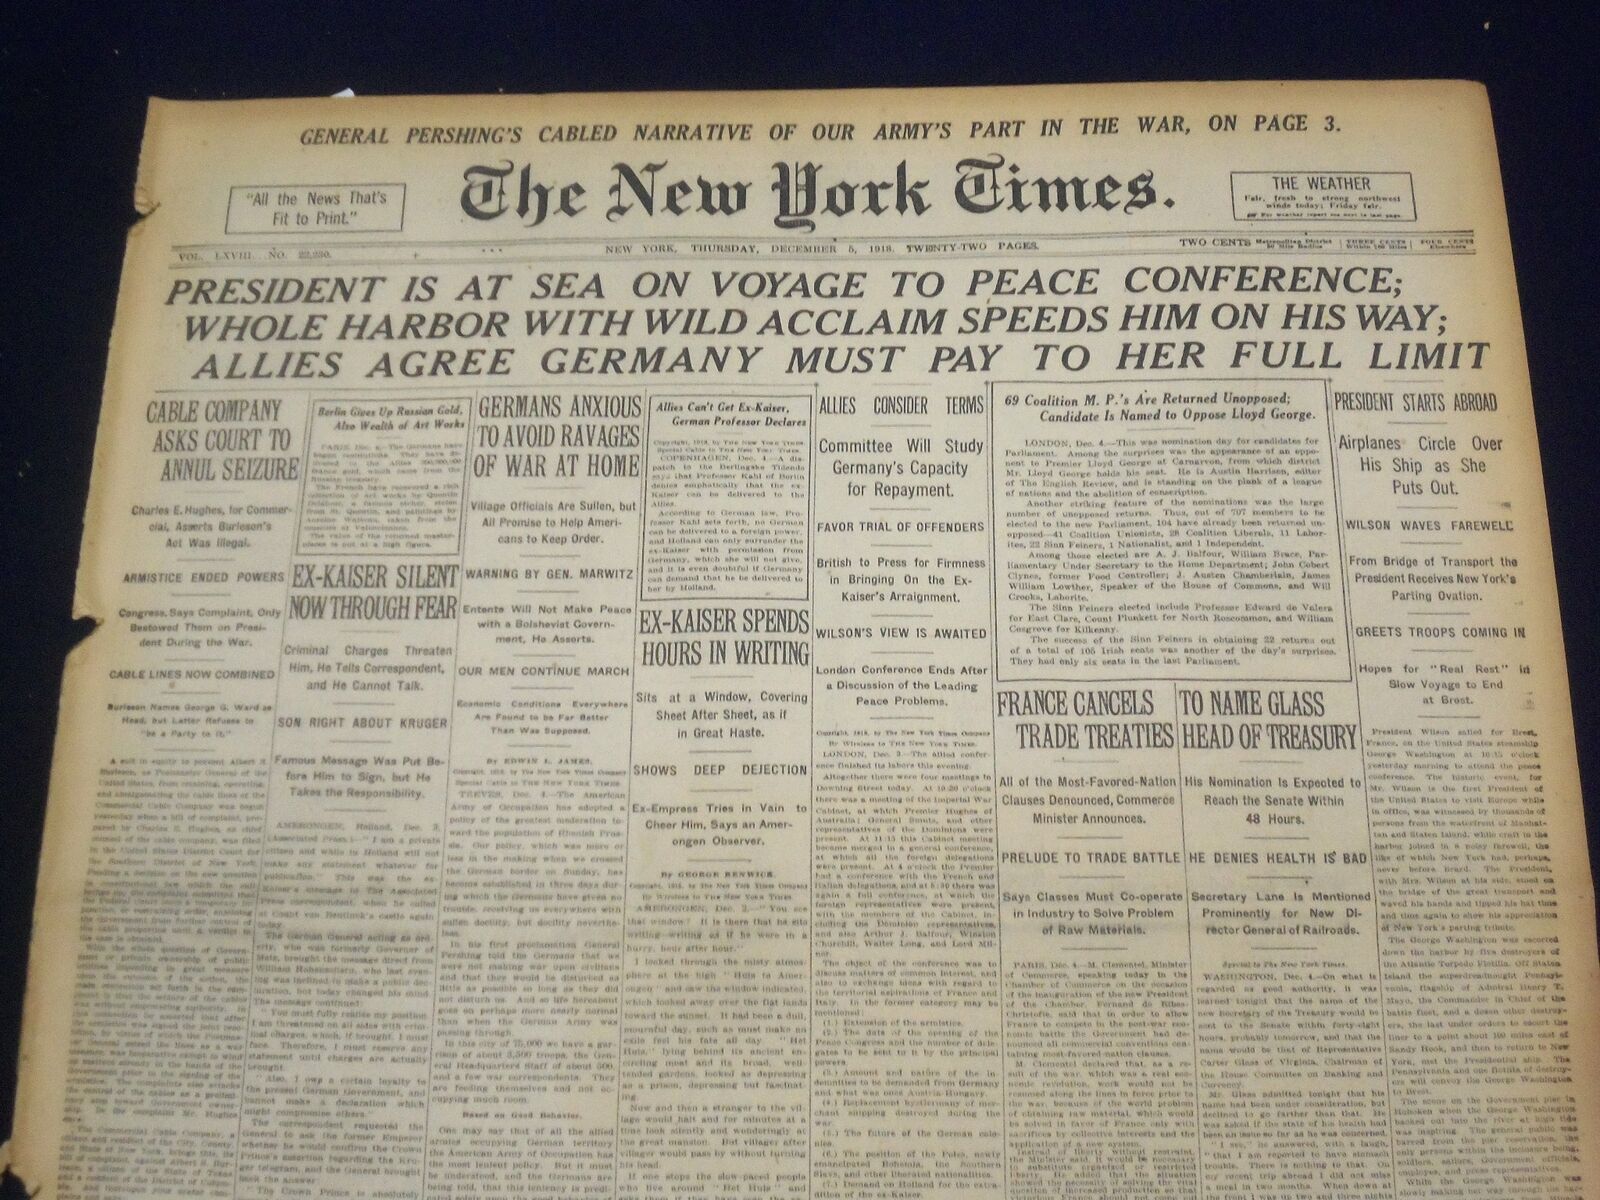 1918 DECEMBER 5 NEW YORK TIMES - PRESIDENT AT SEA, PERSHIING NARRATIVE - NT 9162